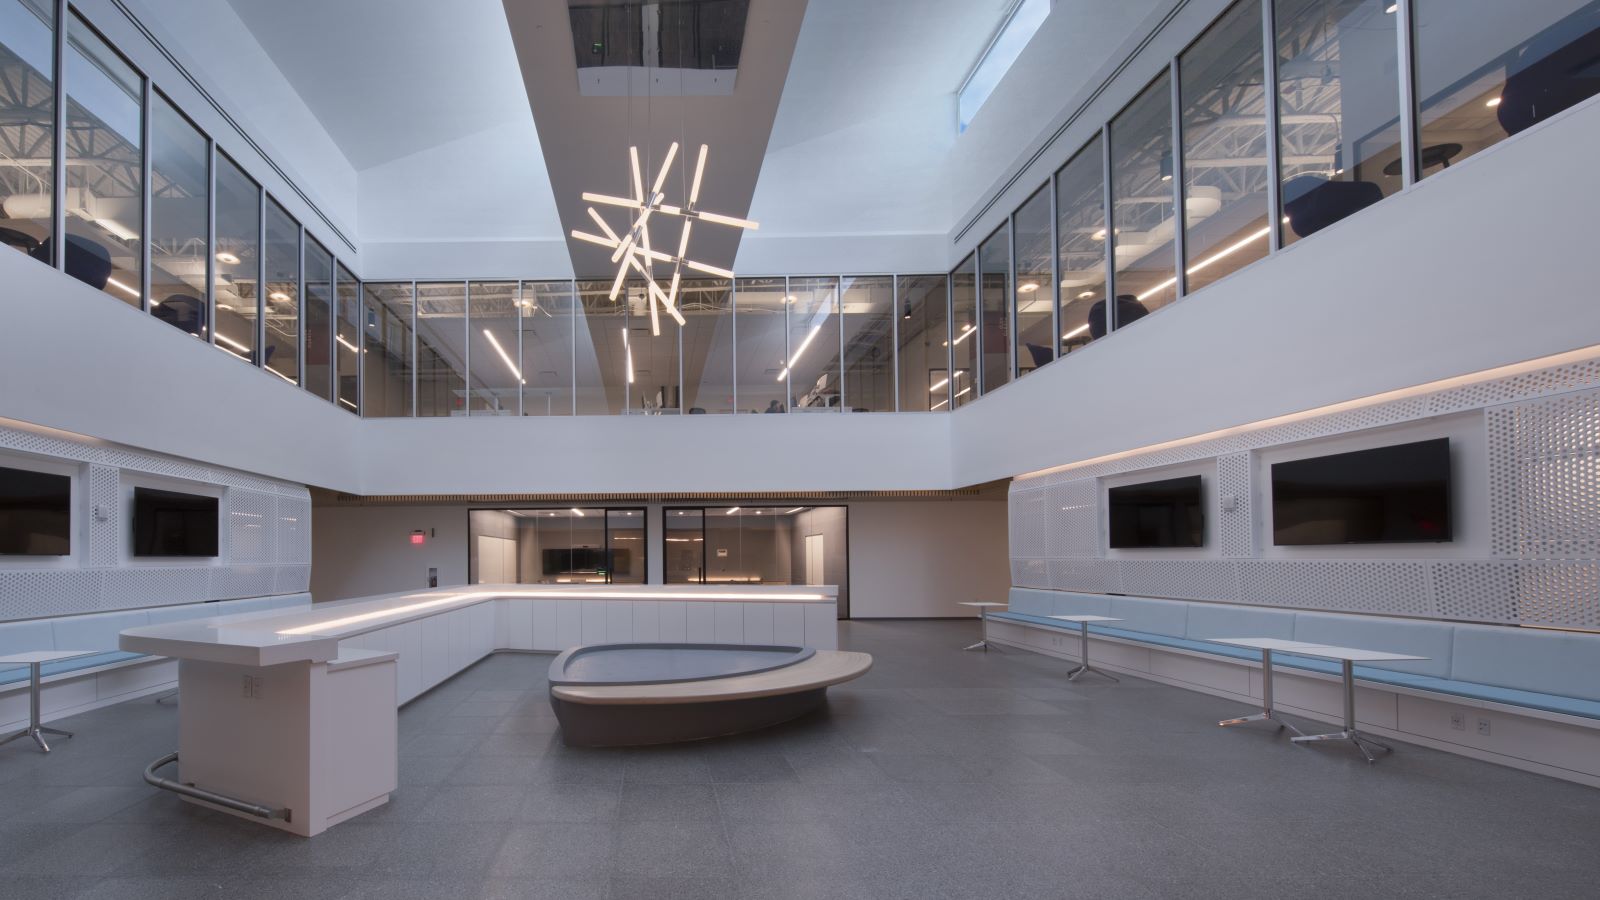 Telemundo Luxury Modern Interior, Collaborative Campus - Mace Group